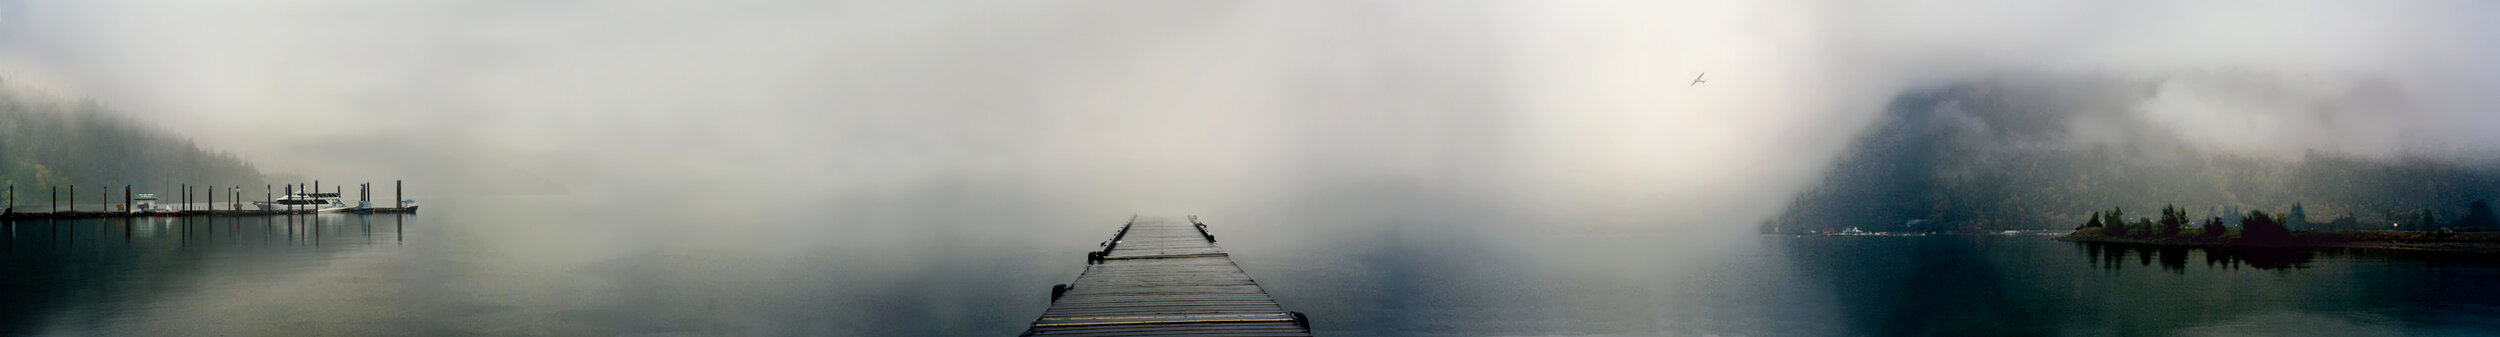 Misty Lake Dock, Harrison Hot Springs, digital composite, 2012